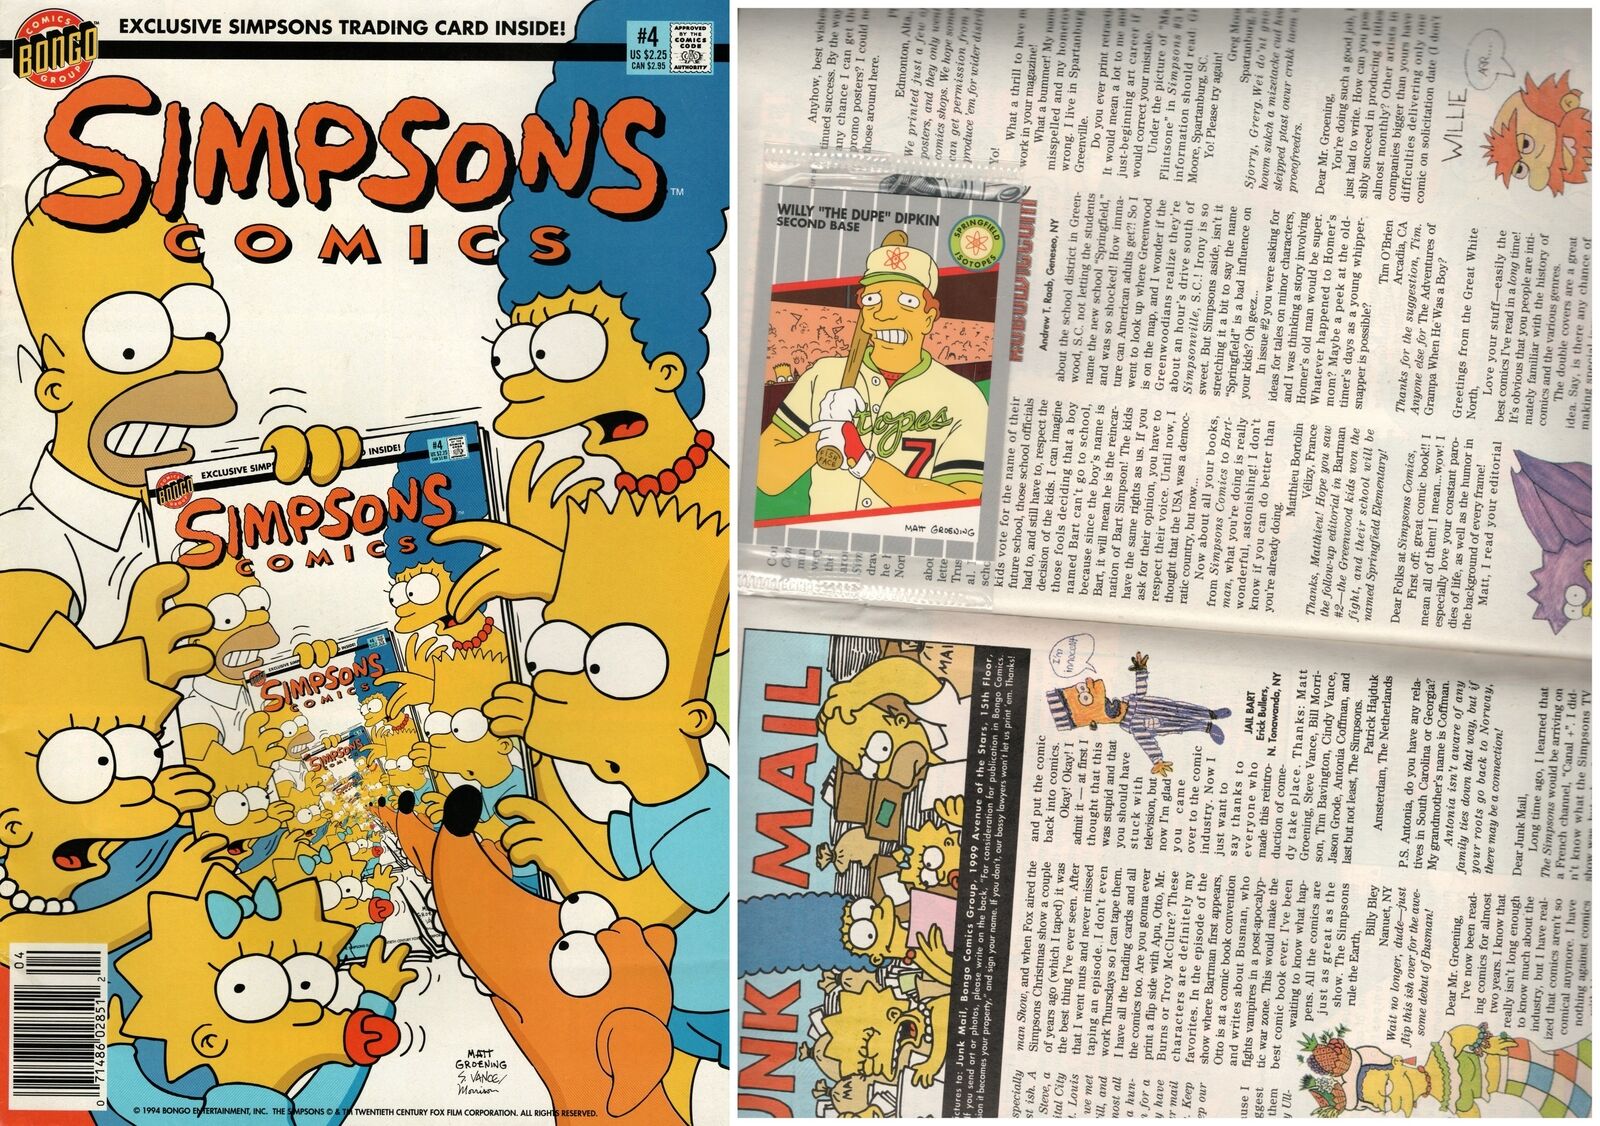 Simpsons Comics #4 Newsstand Cover with Card (1993-2018) Bongo Comics